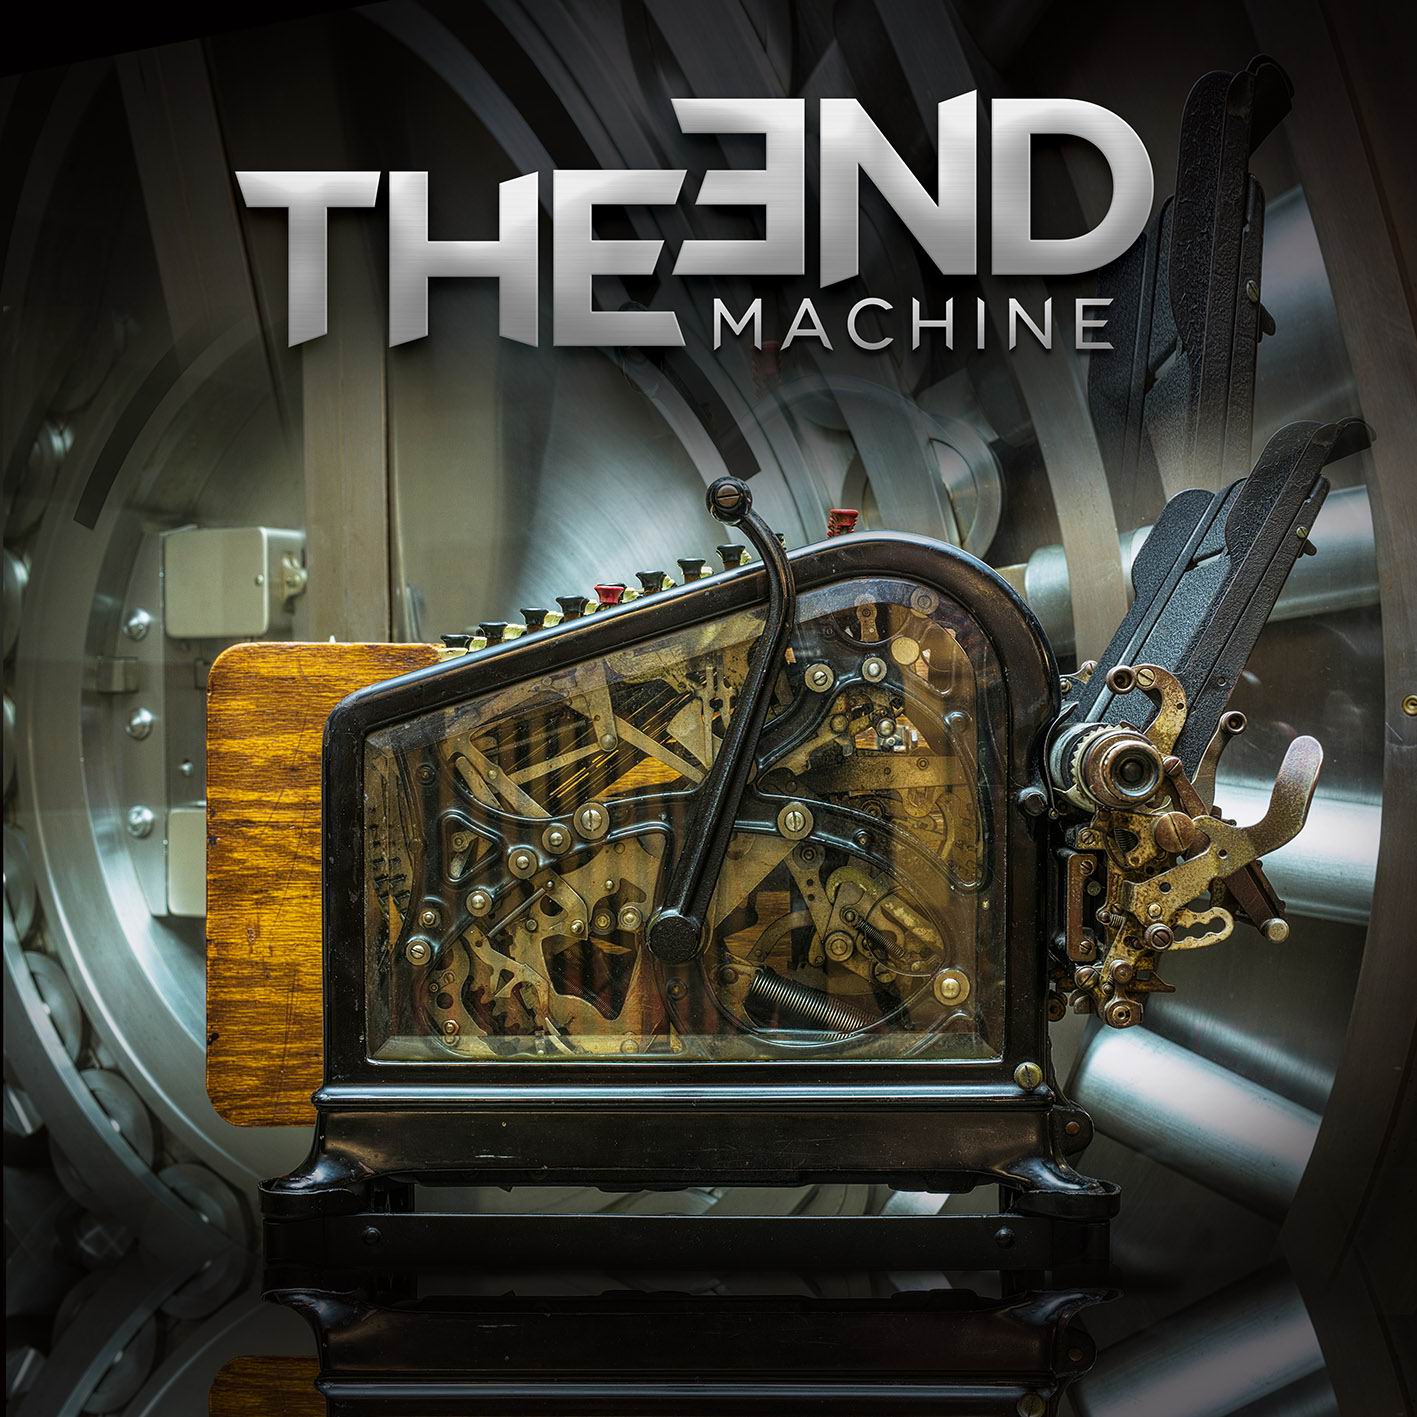 The End Machine - “The End Machine”